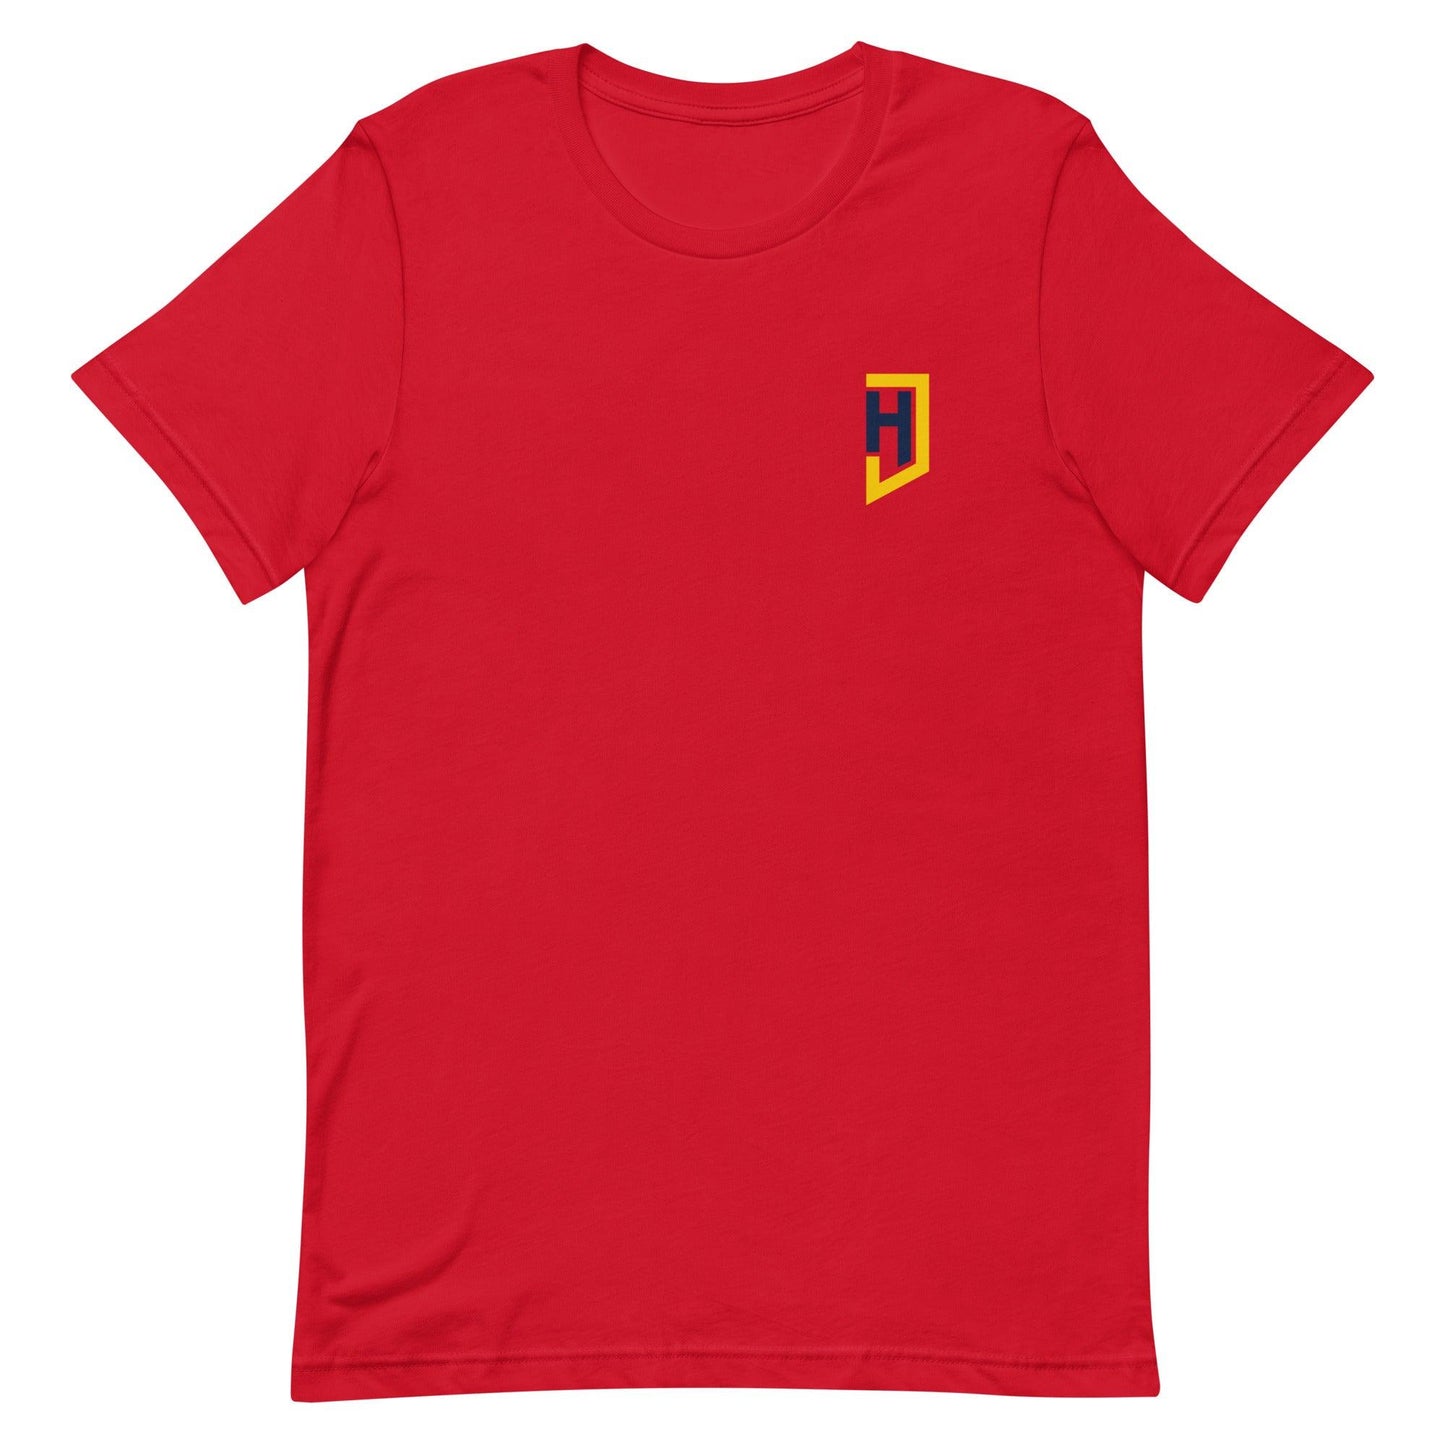 Jeremiah Hunter "Signature" t-shirt - Fan Arch